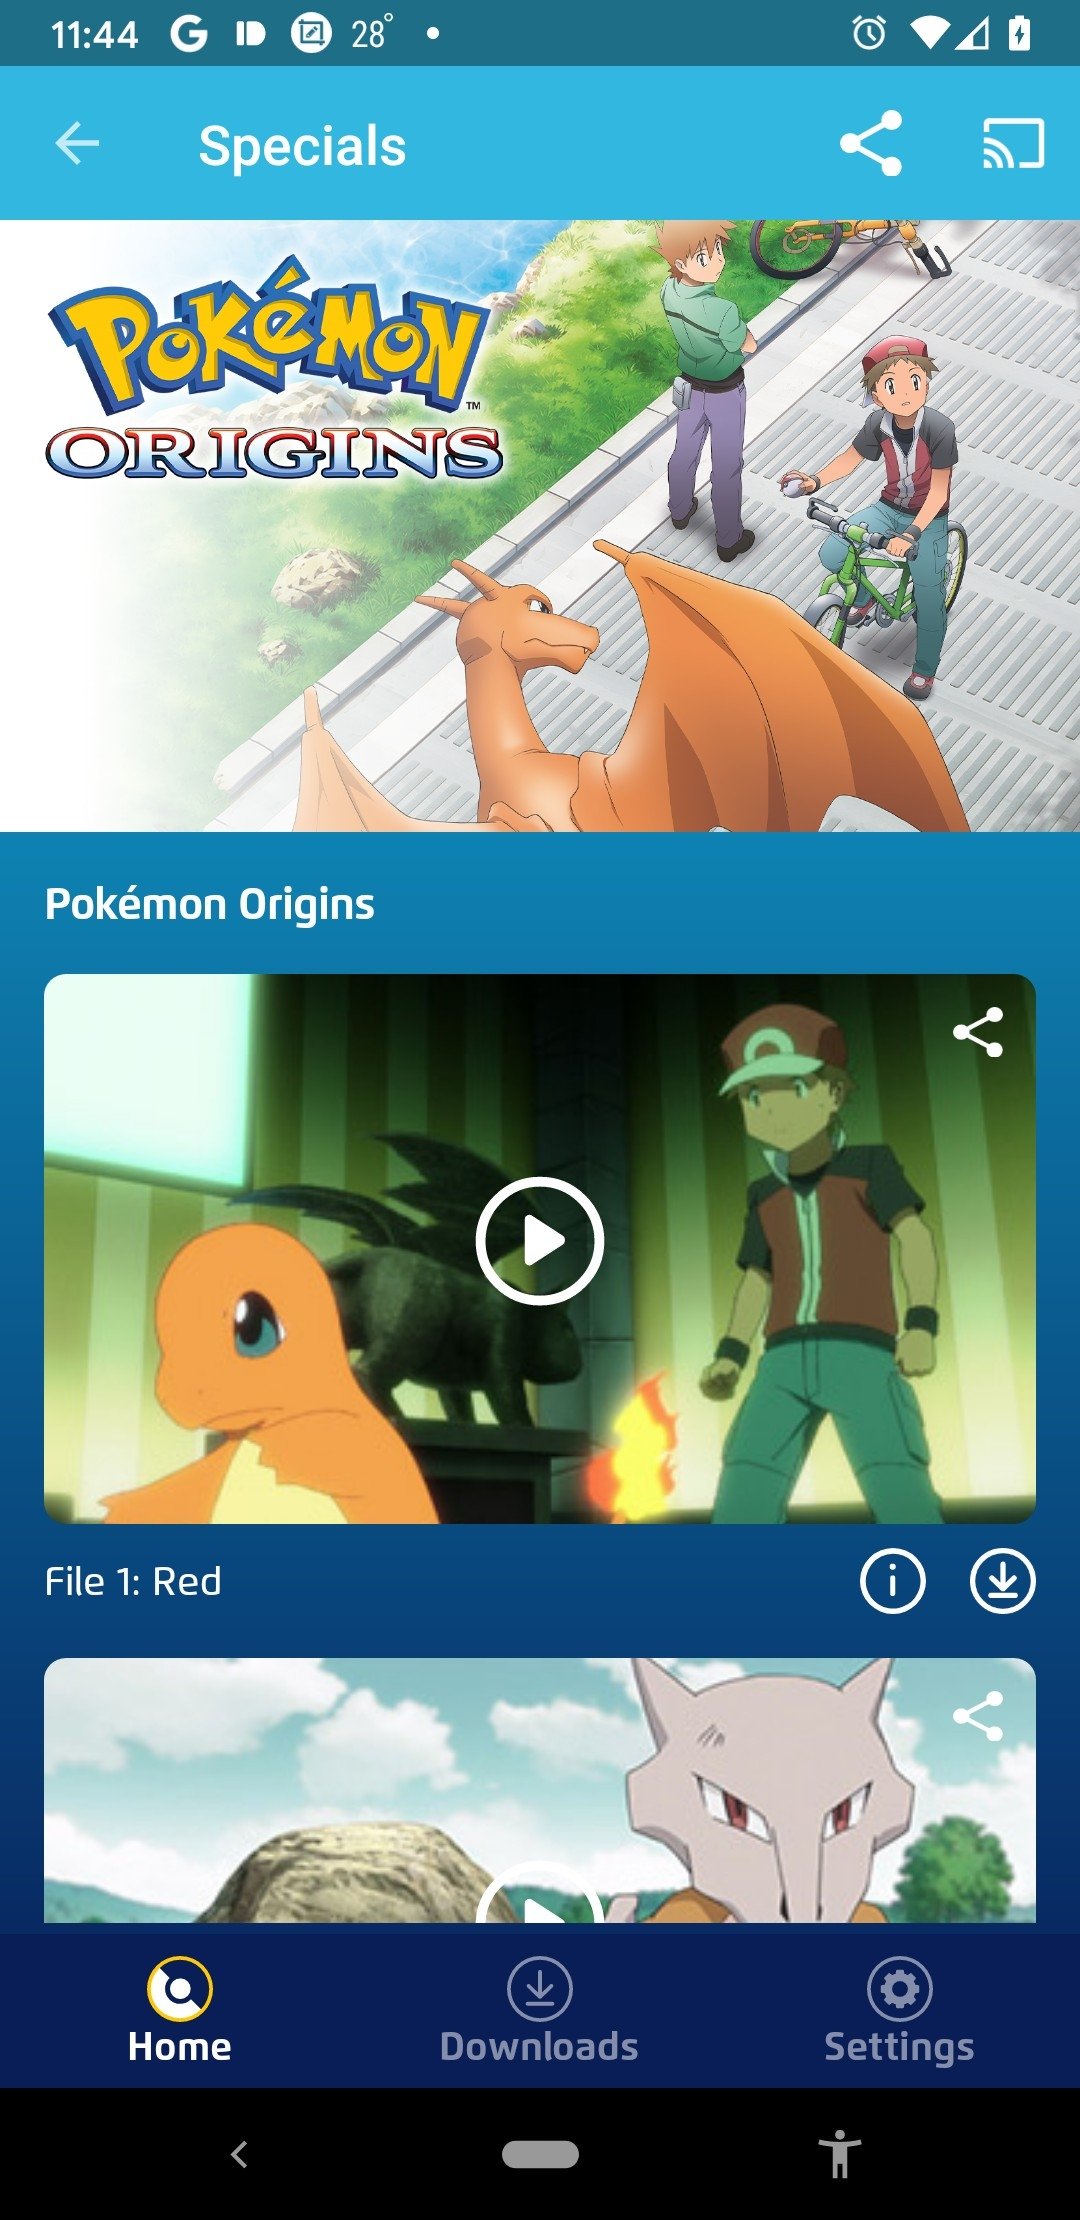 Pokémon: Origins - TV on Google Play